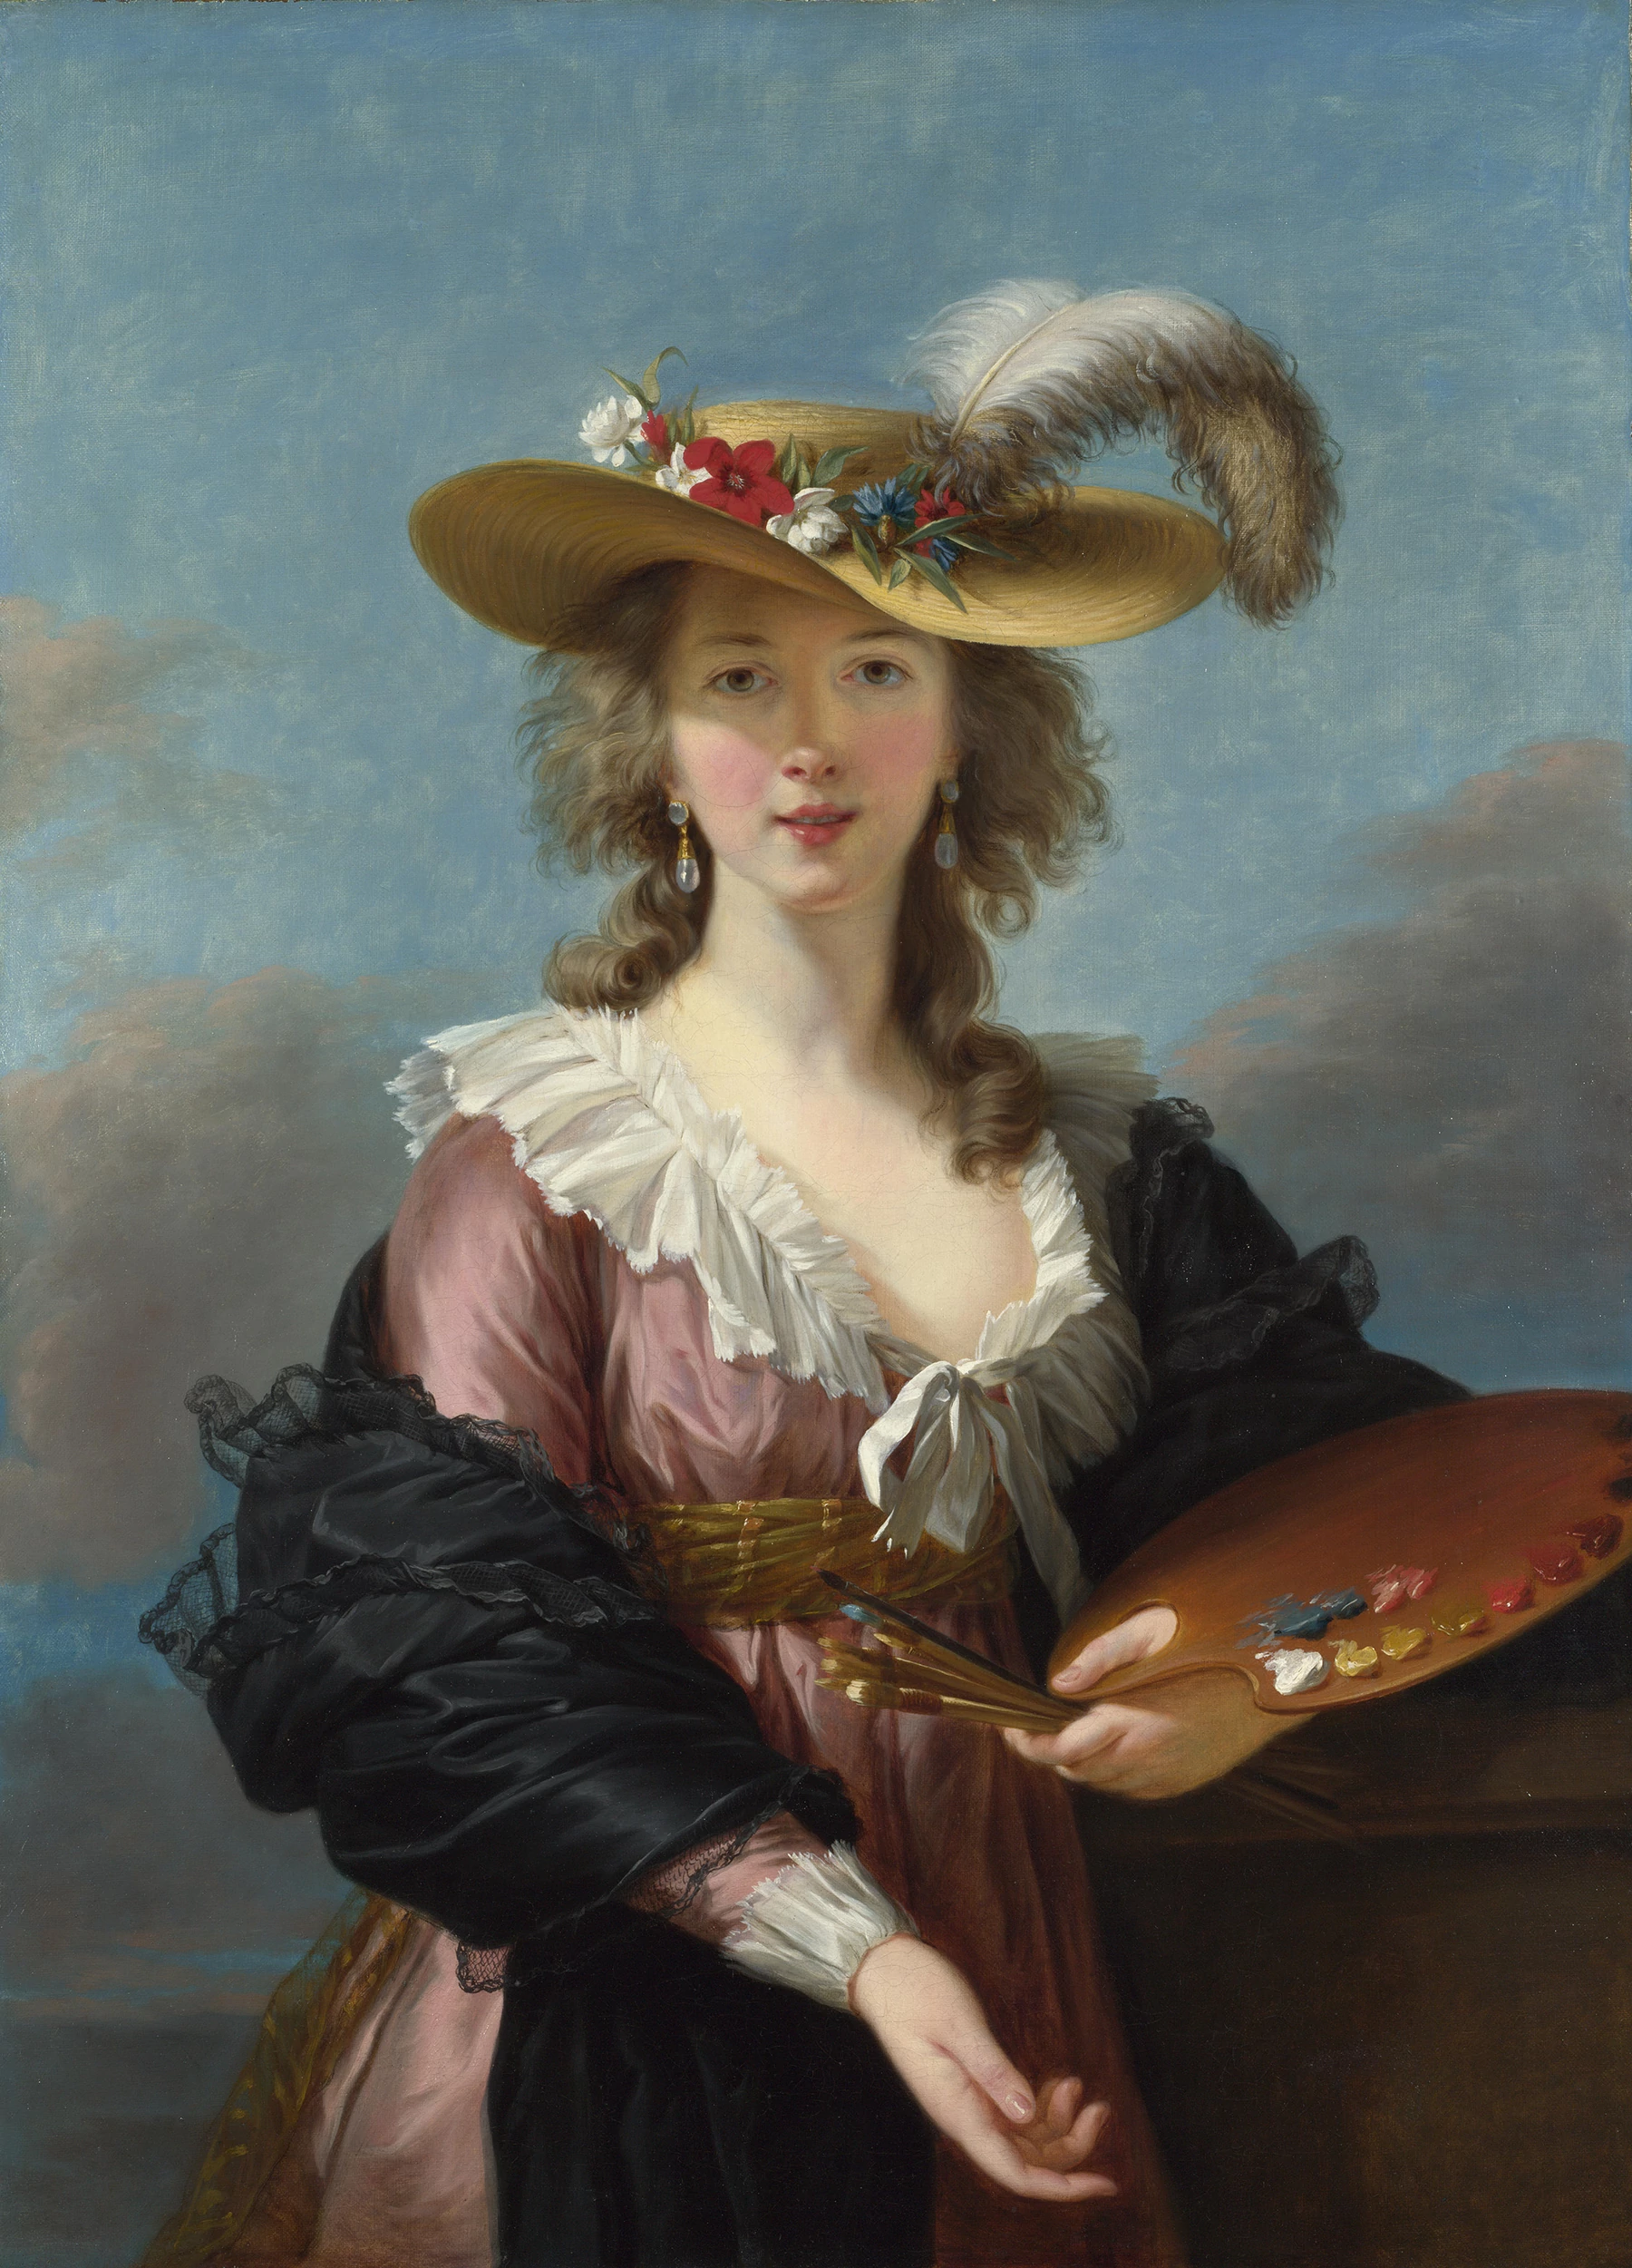 Élisabeth Vigée Le Brun, The Artists